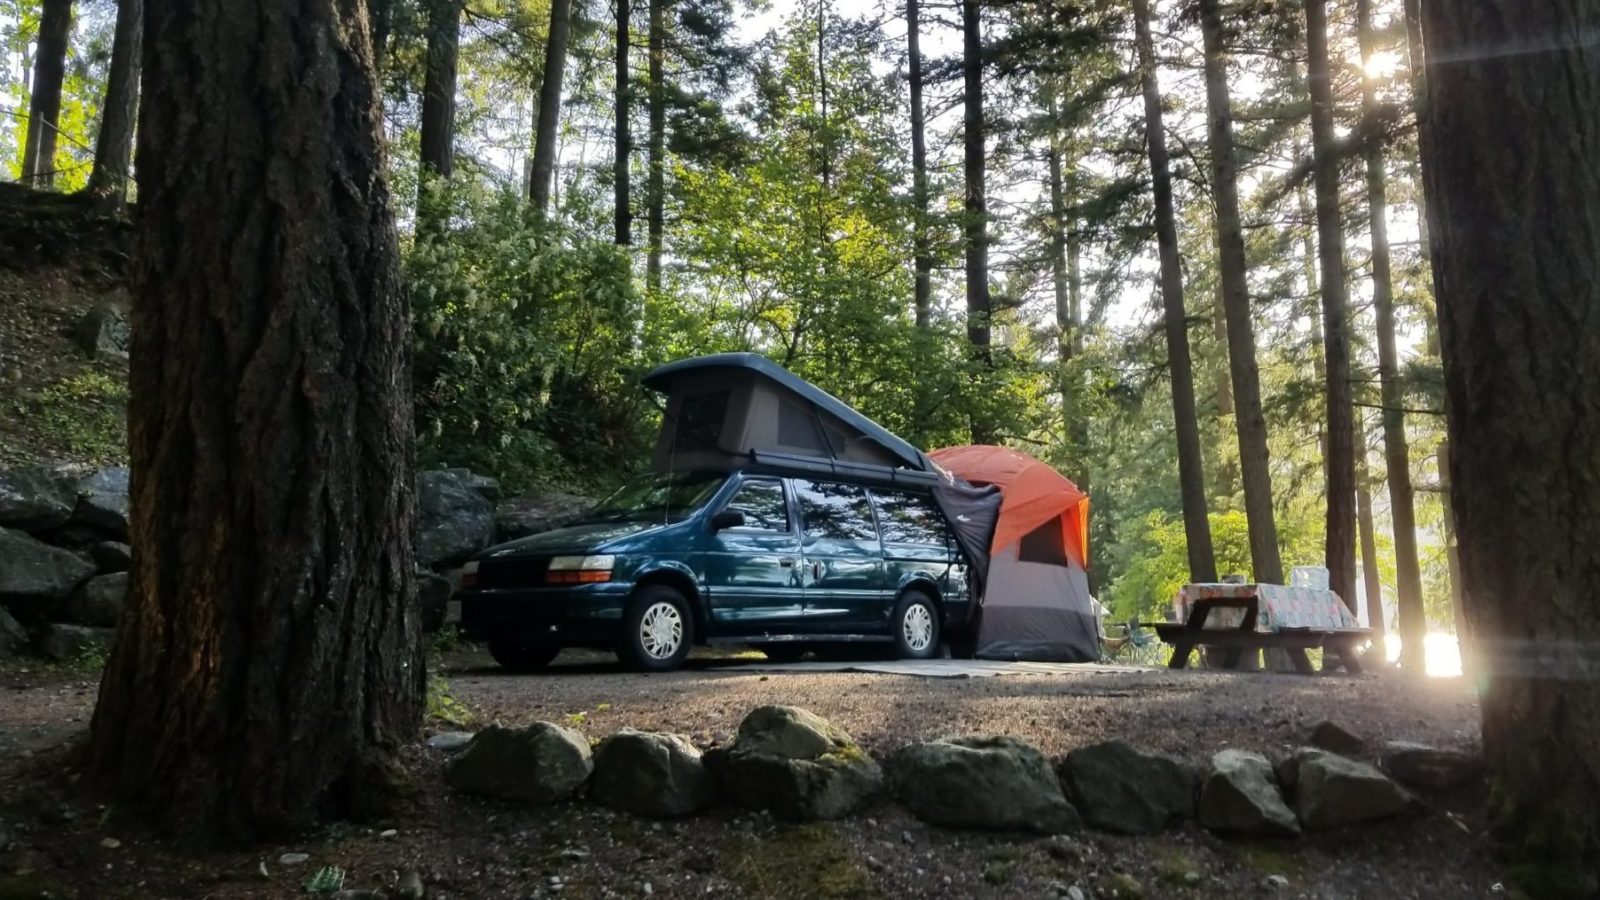 poptop camper van and tent